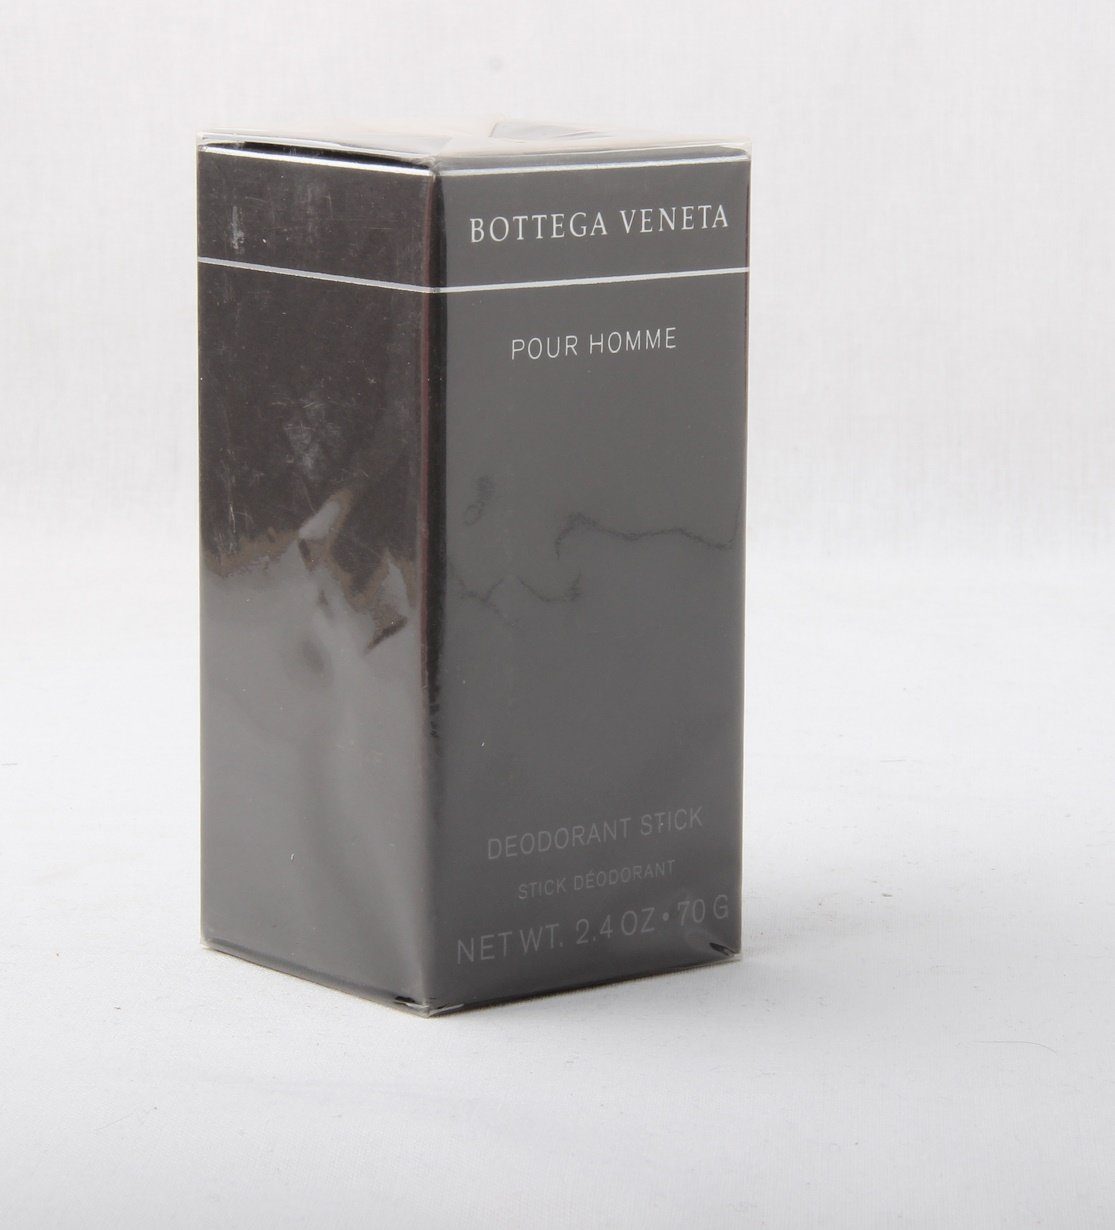 BOTTEGA VENETA Körperspray Bottega Veneta Pour Homme Deodorant Stick 70g | Körpersprays